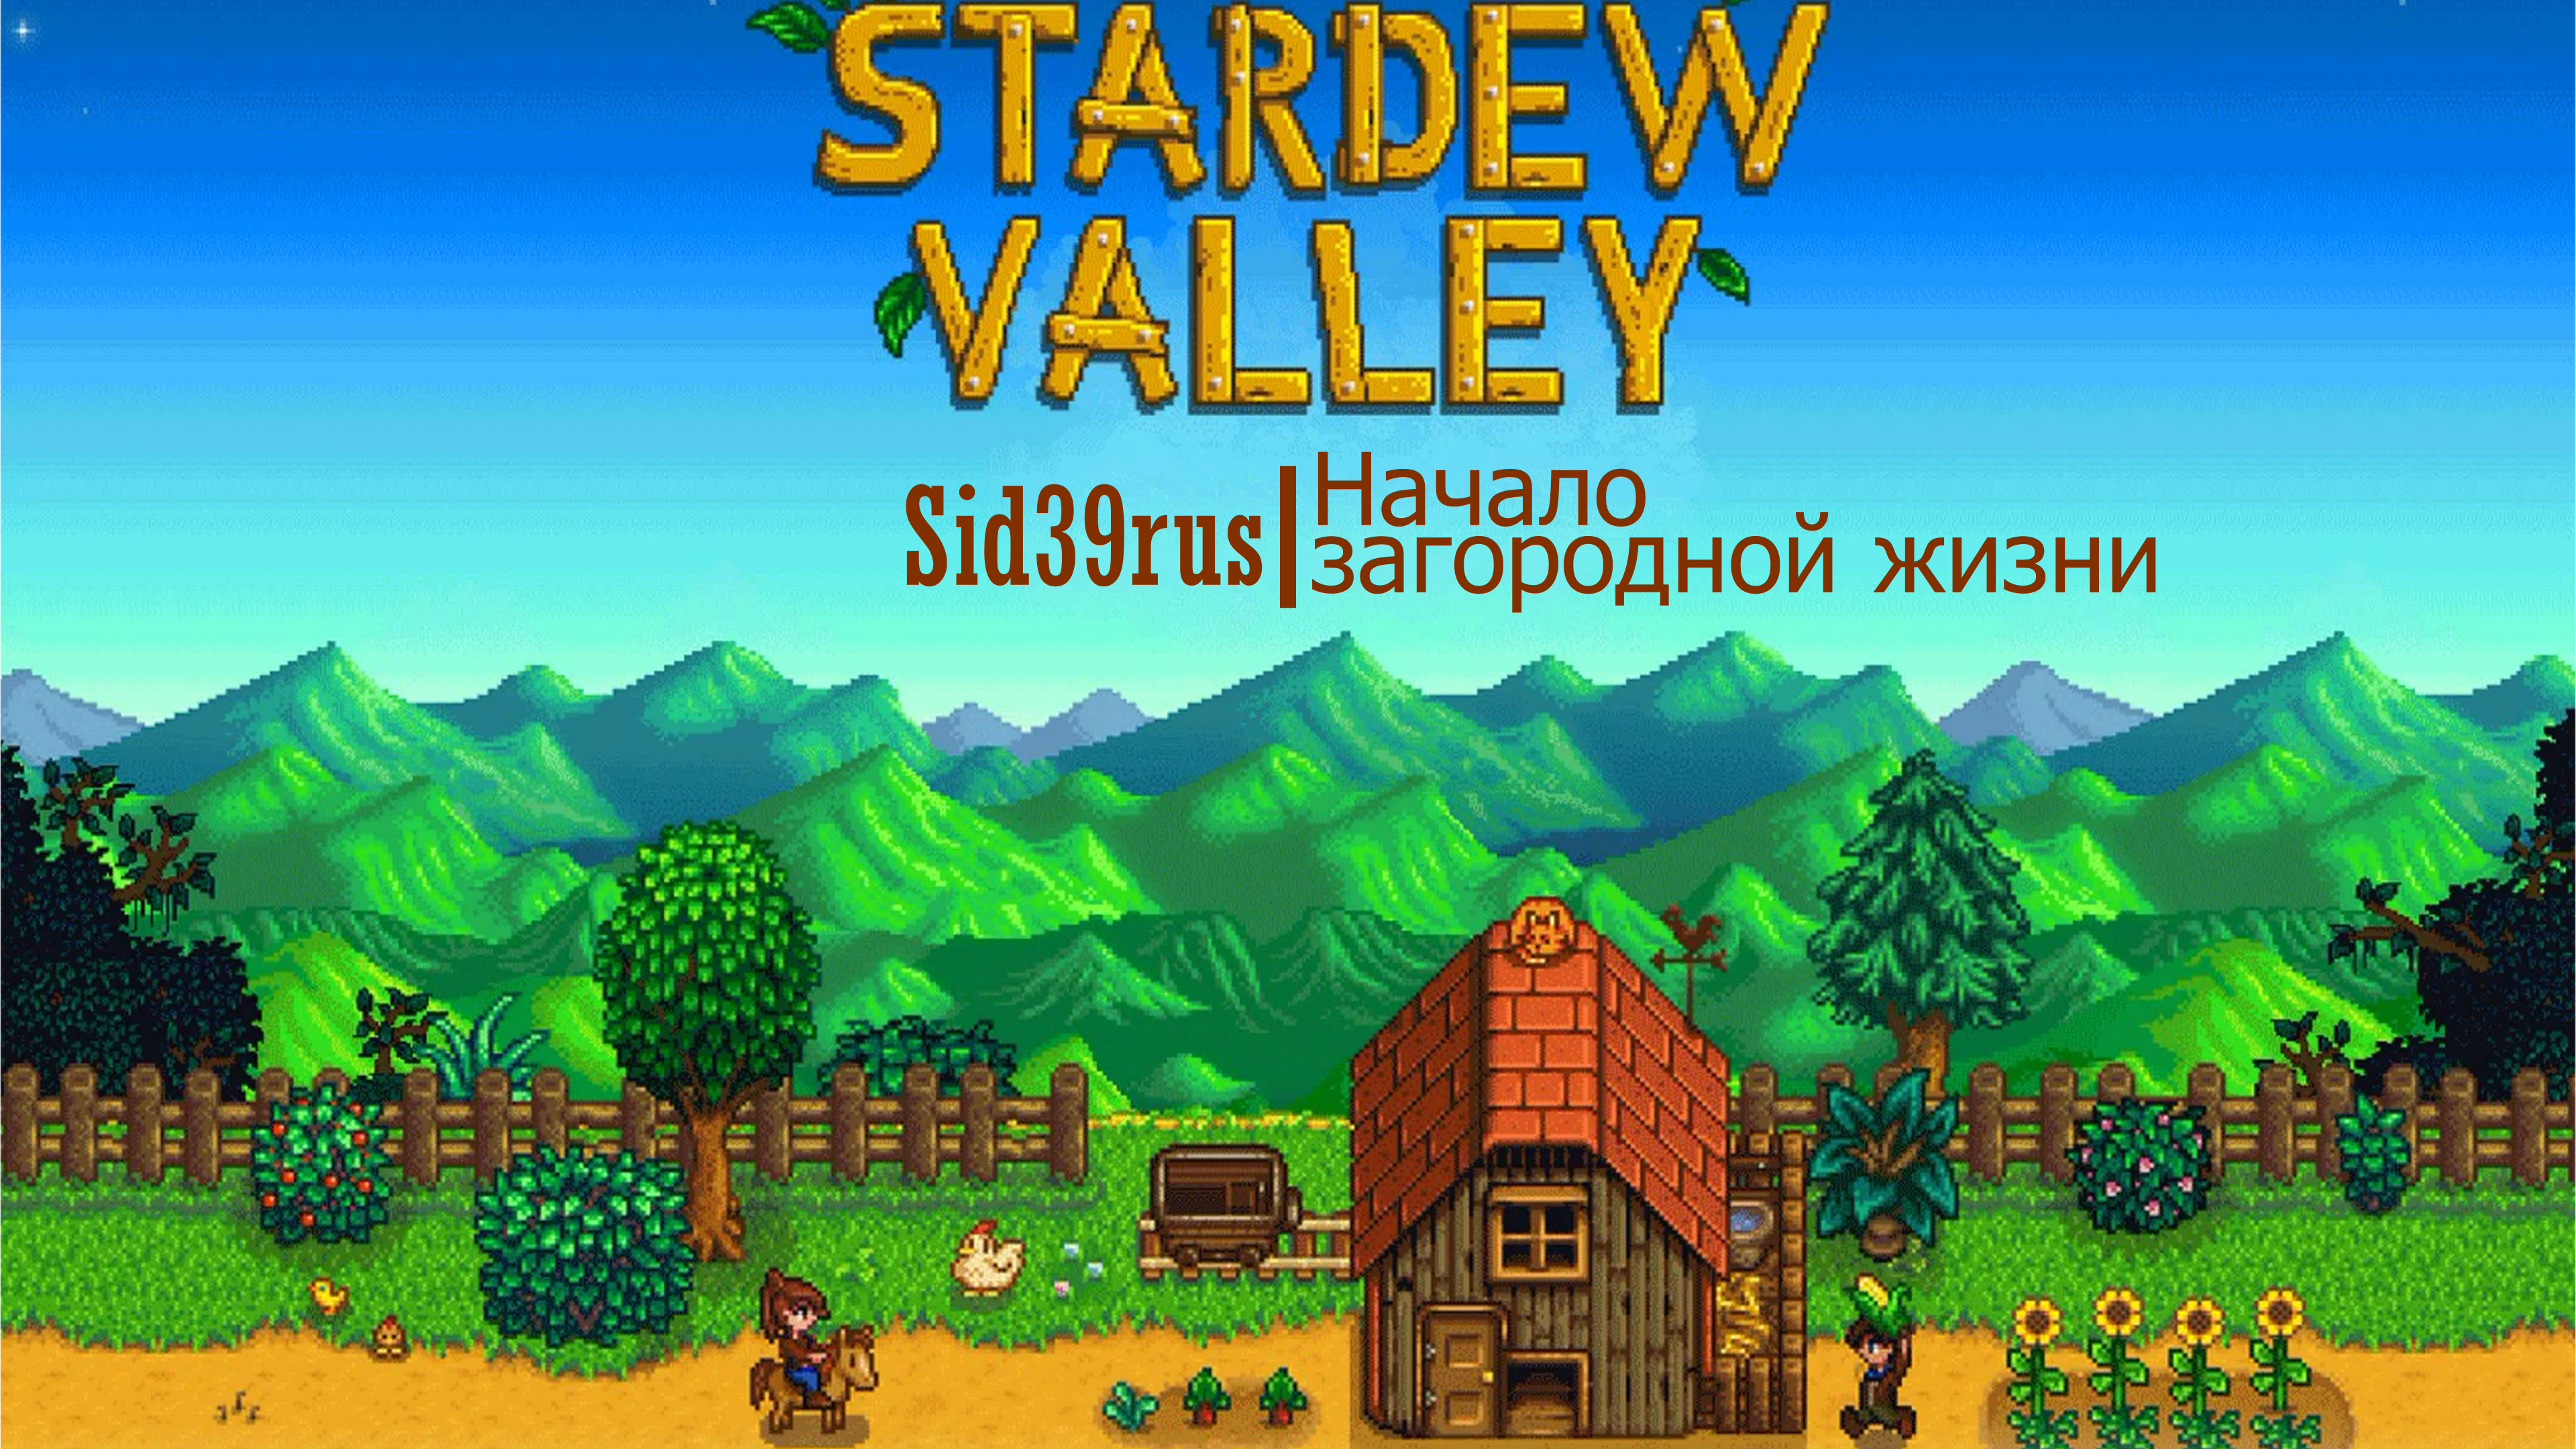 Stardew Valley | Начало загородной жизни. #1 (без комментариев)